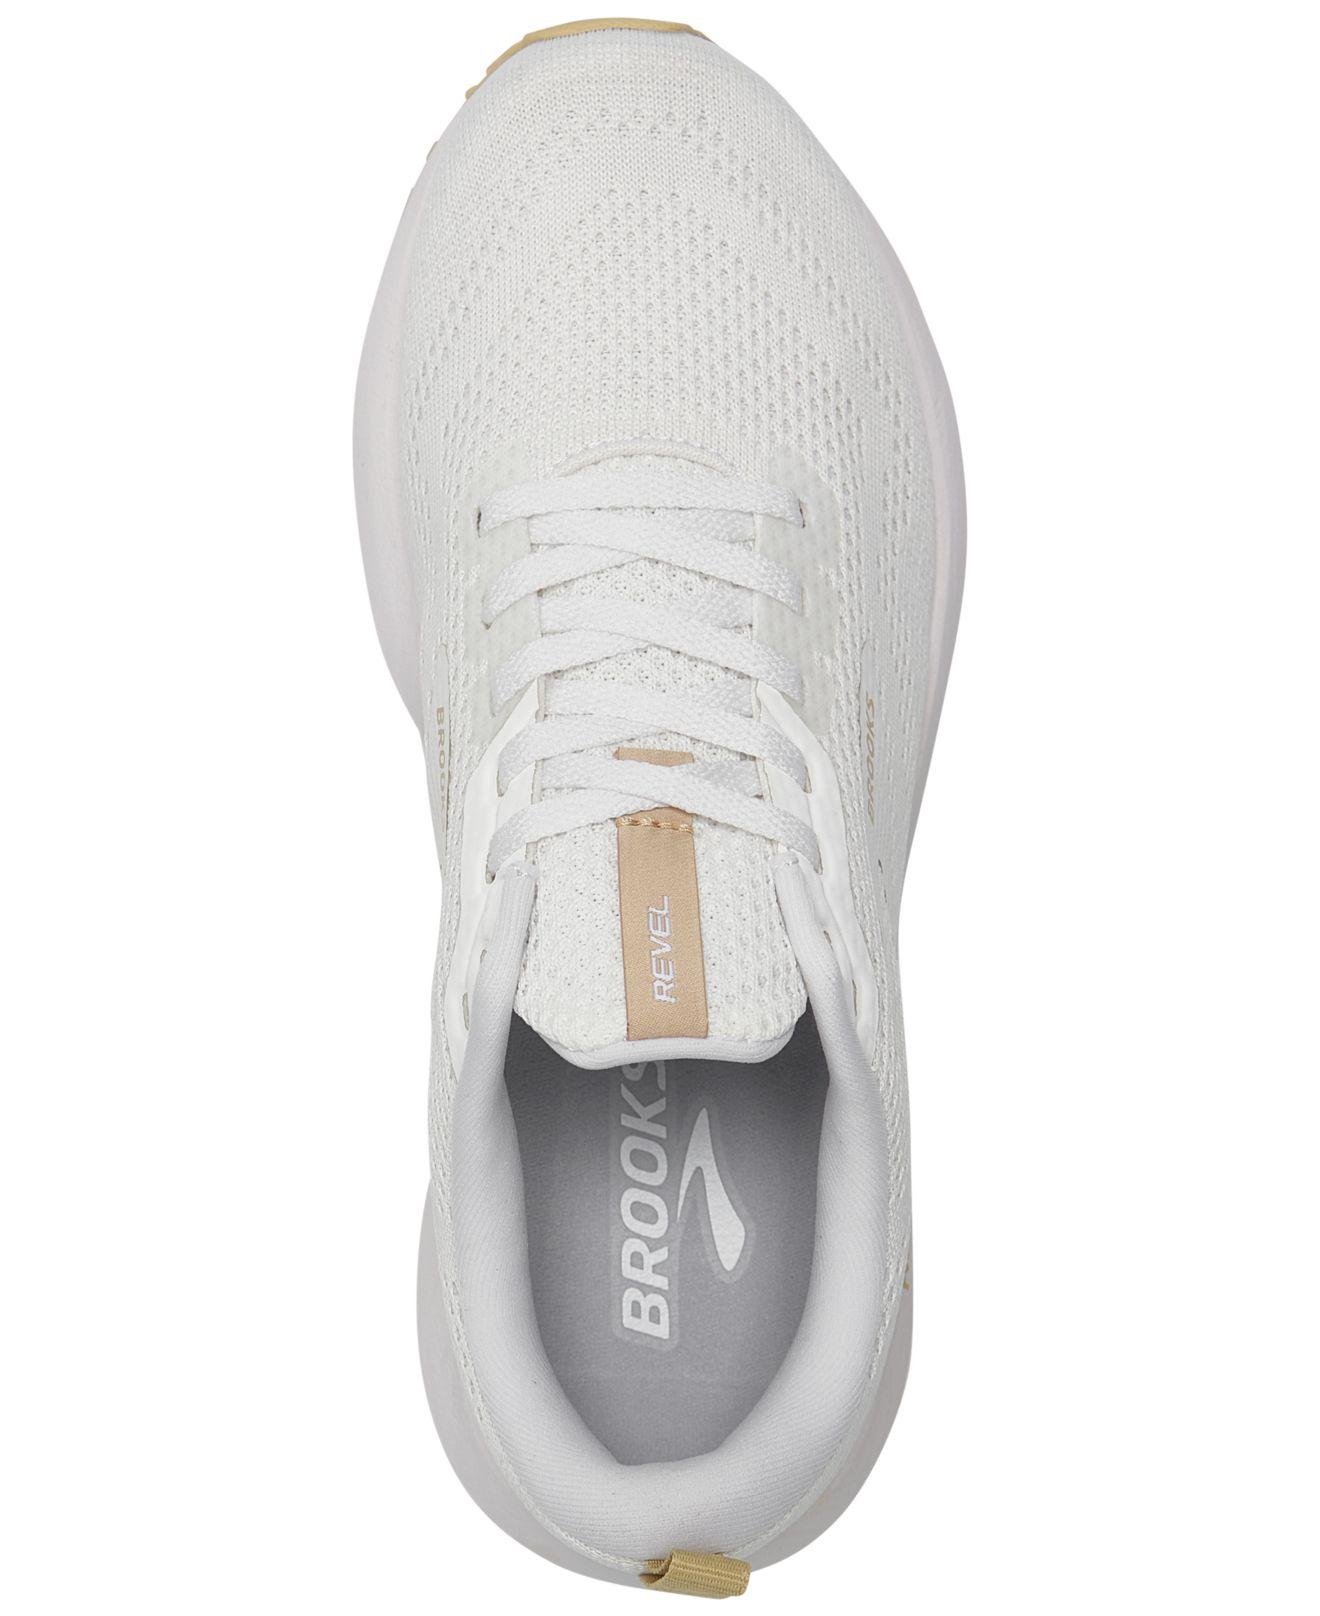 Brooks Revel 6 Running Sneakers From Finish Line in White